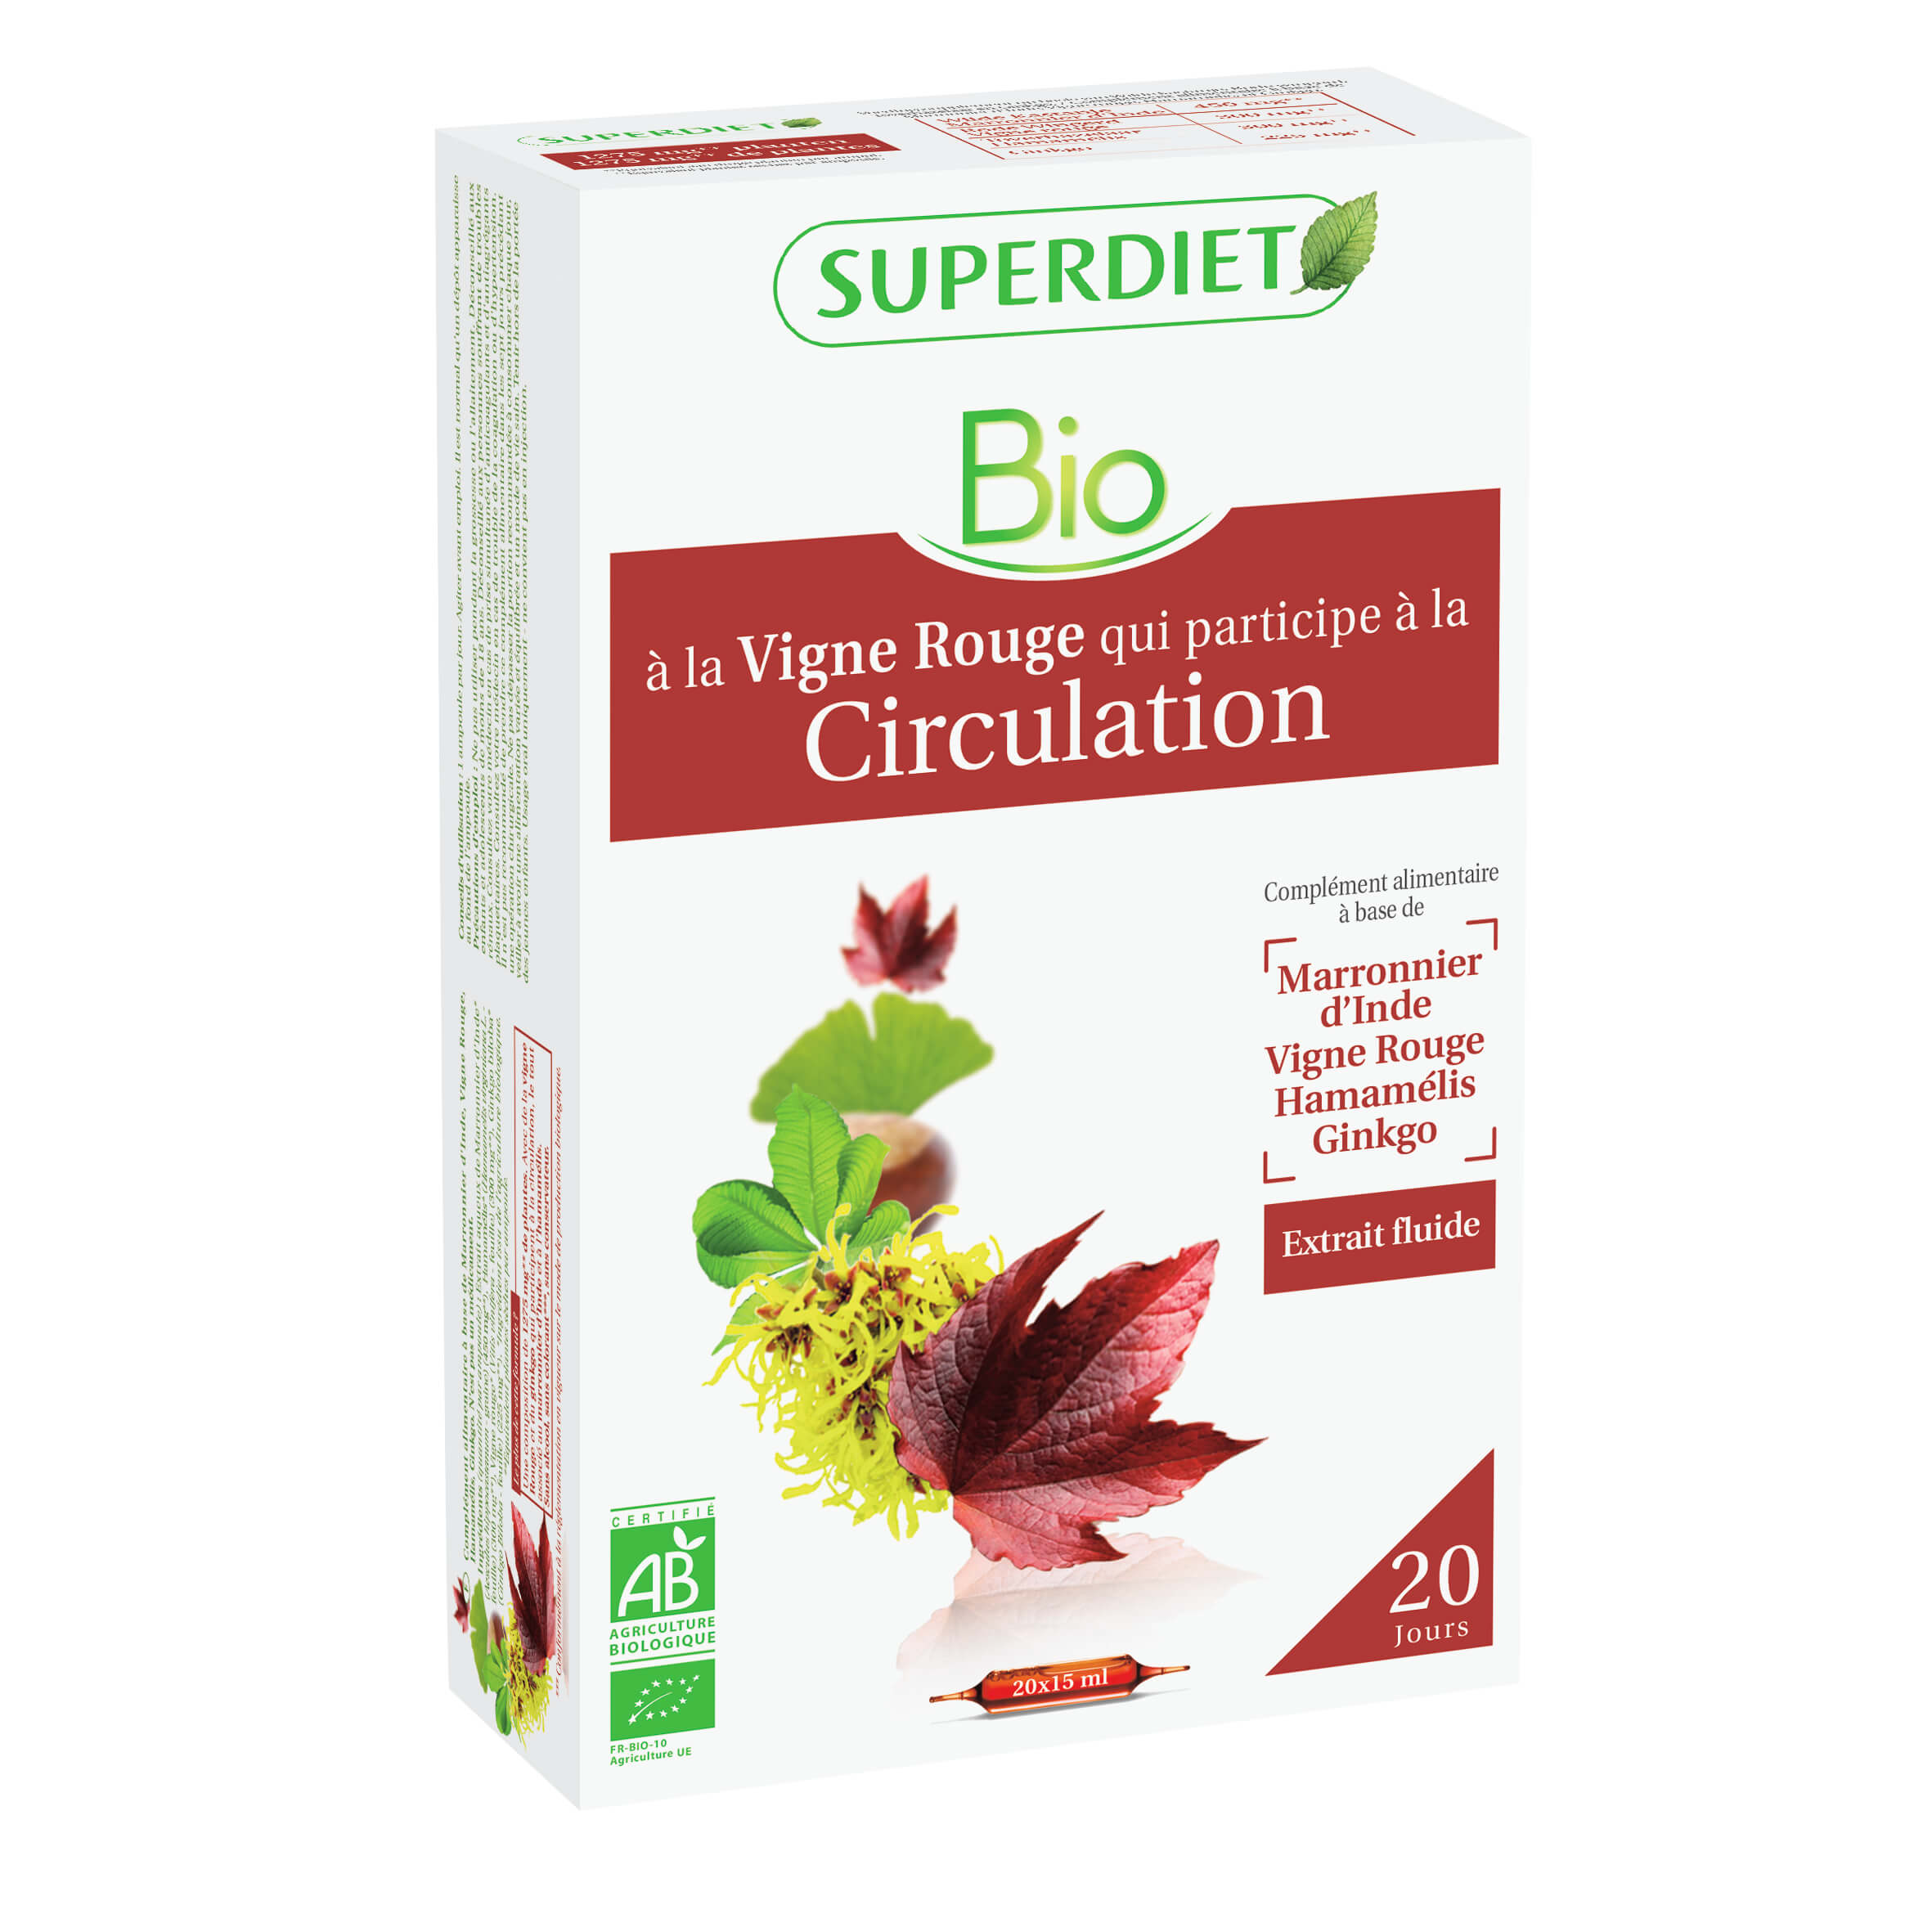 Super Diet Complexe vigne rouge circulation bio 20x15ml PL 483/144